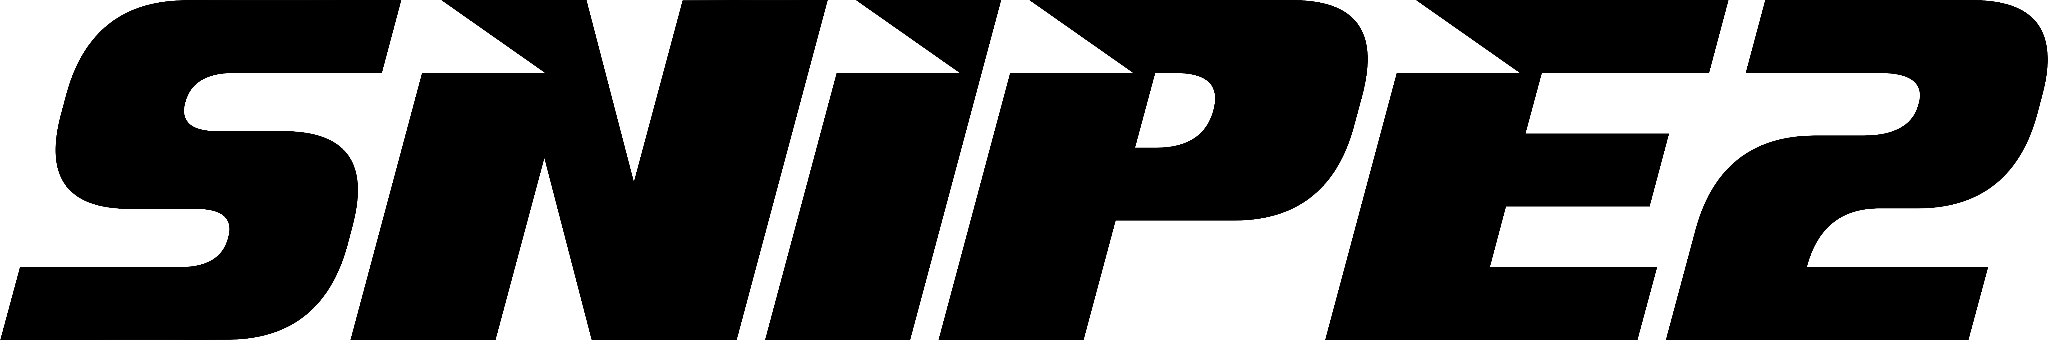 snipe2 logo